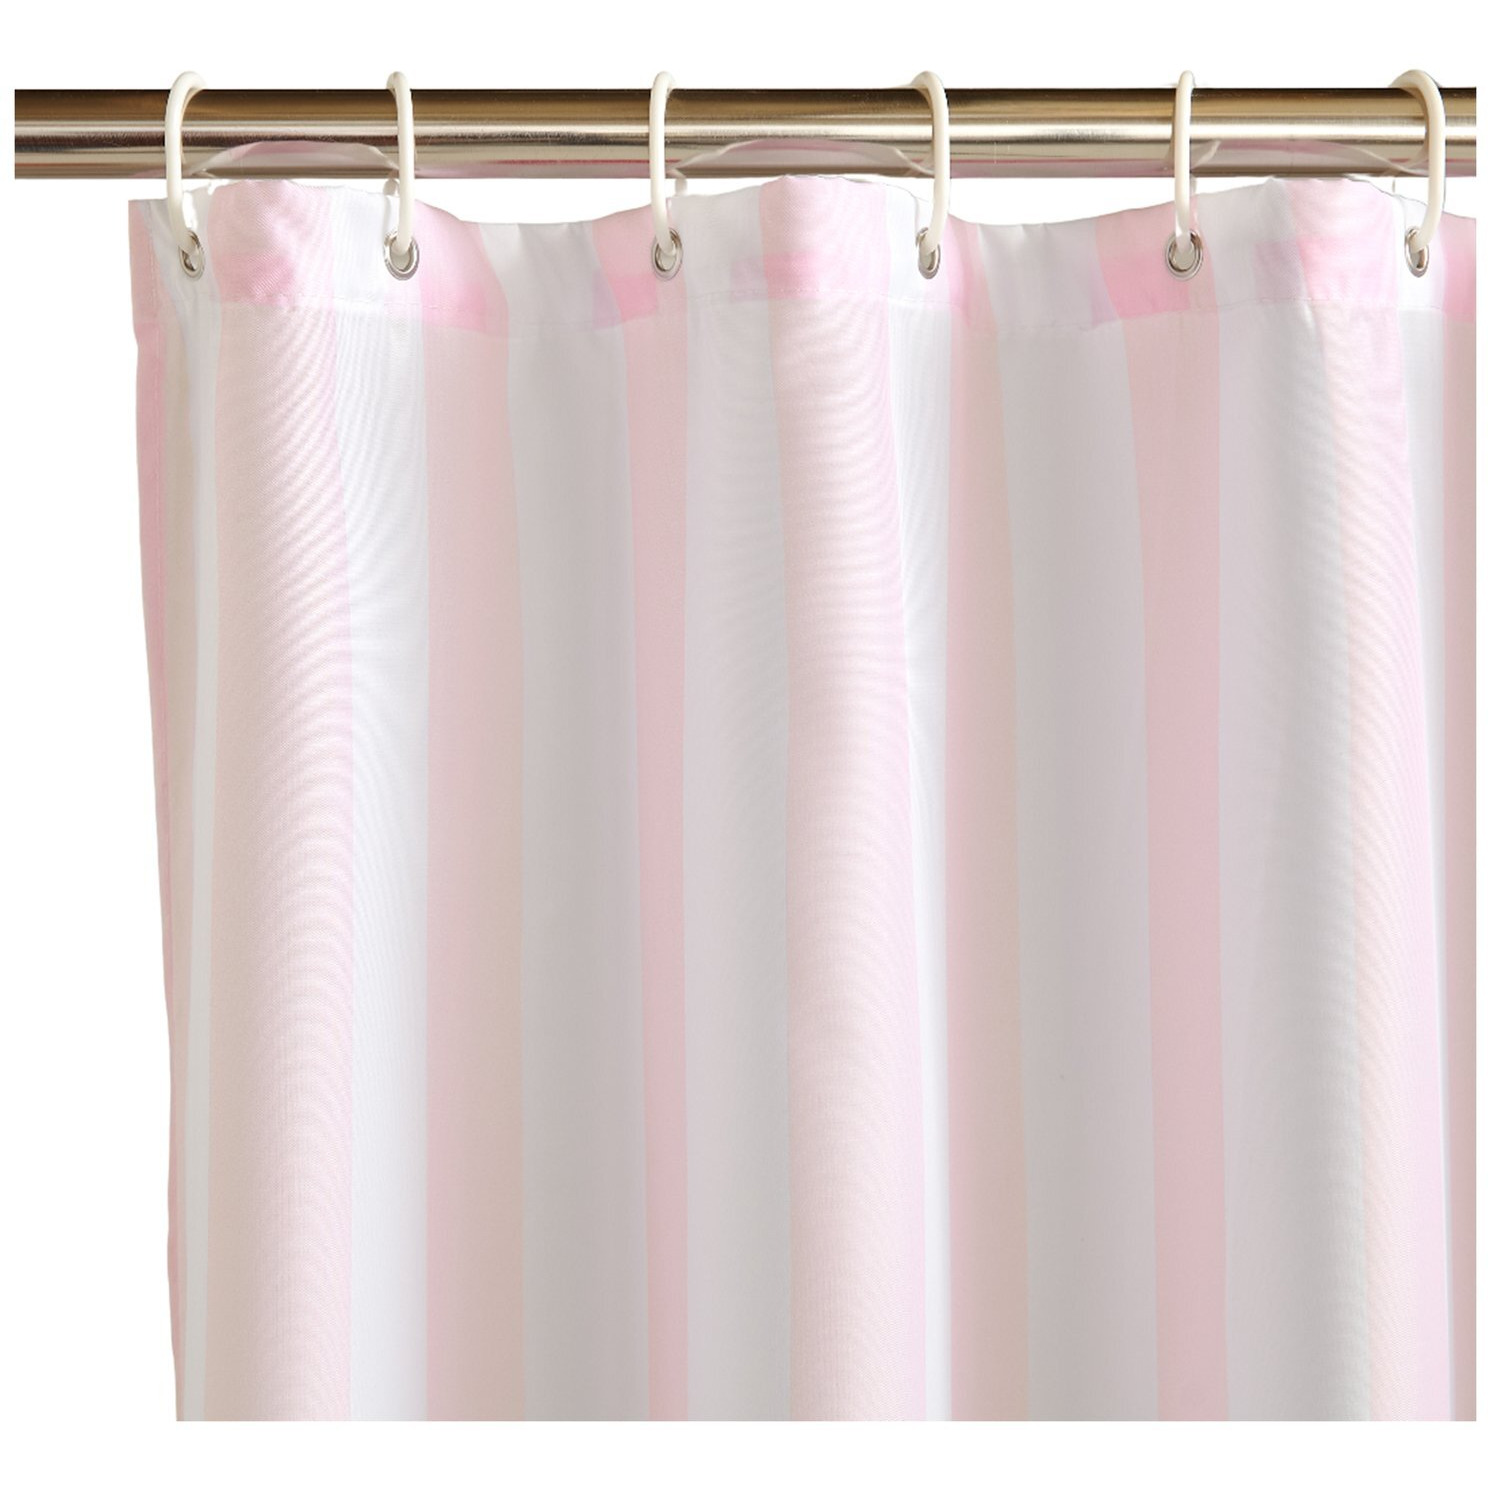 Sassy B Stripe Tease Shower Curtain - Pink - image 1